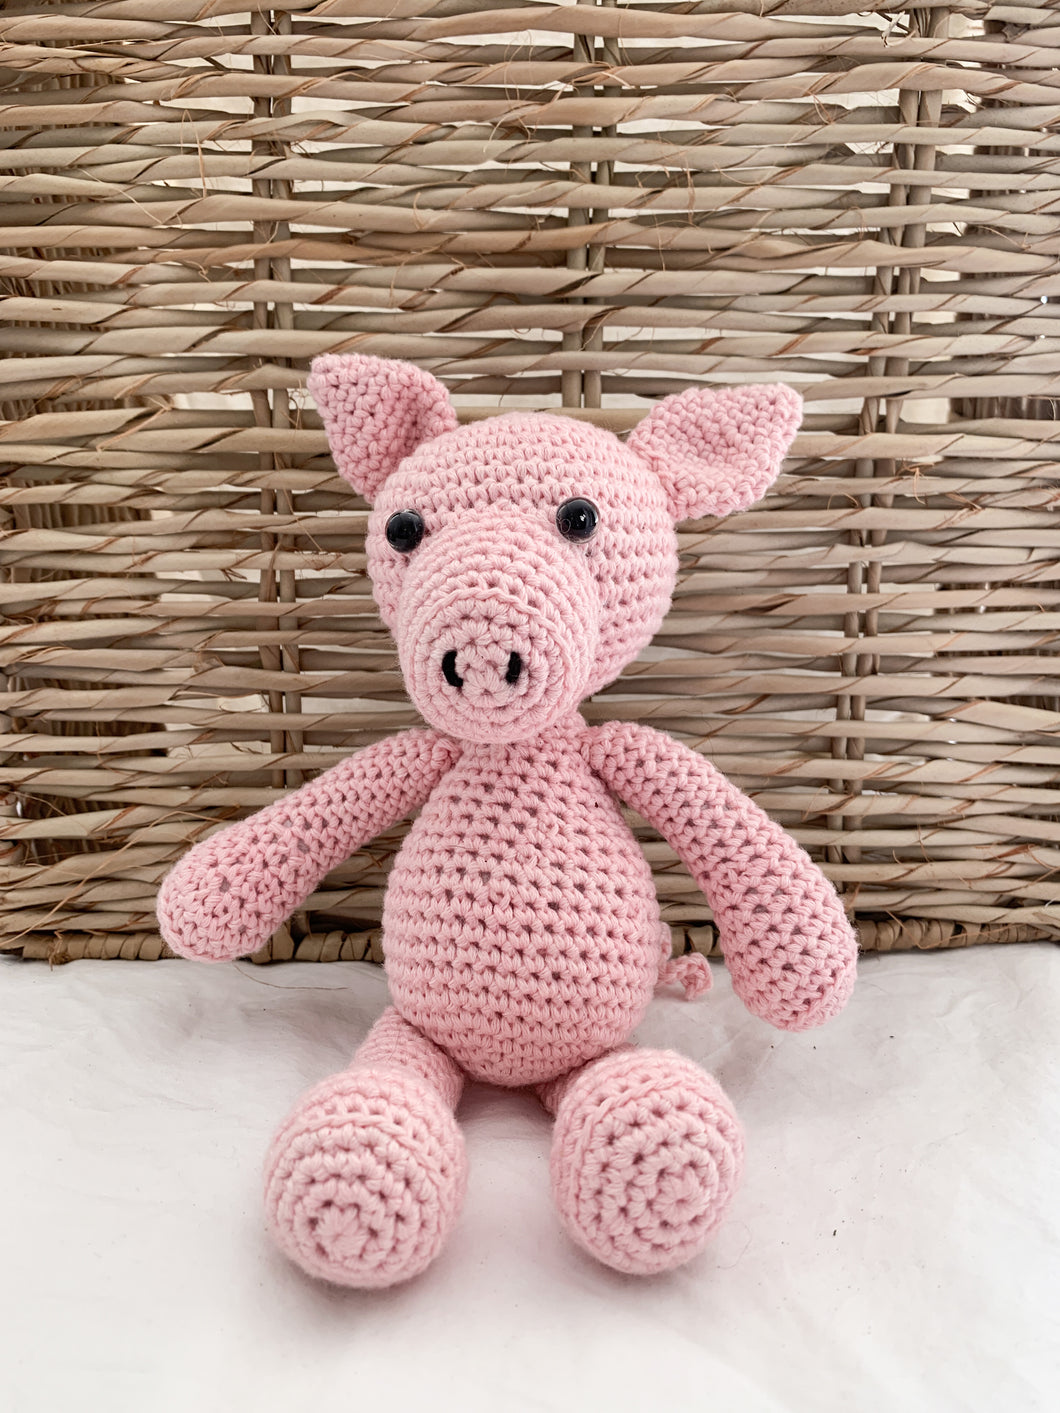 Crochet Toy - Piglet the Pig